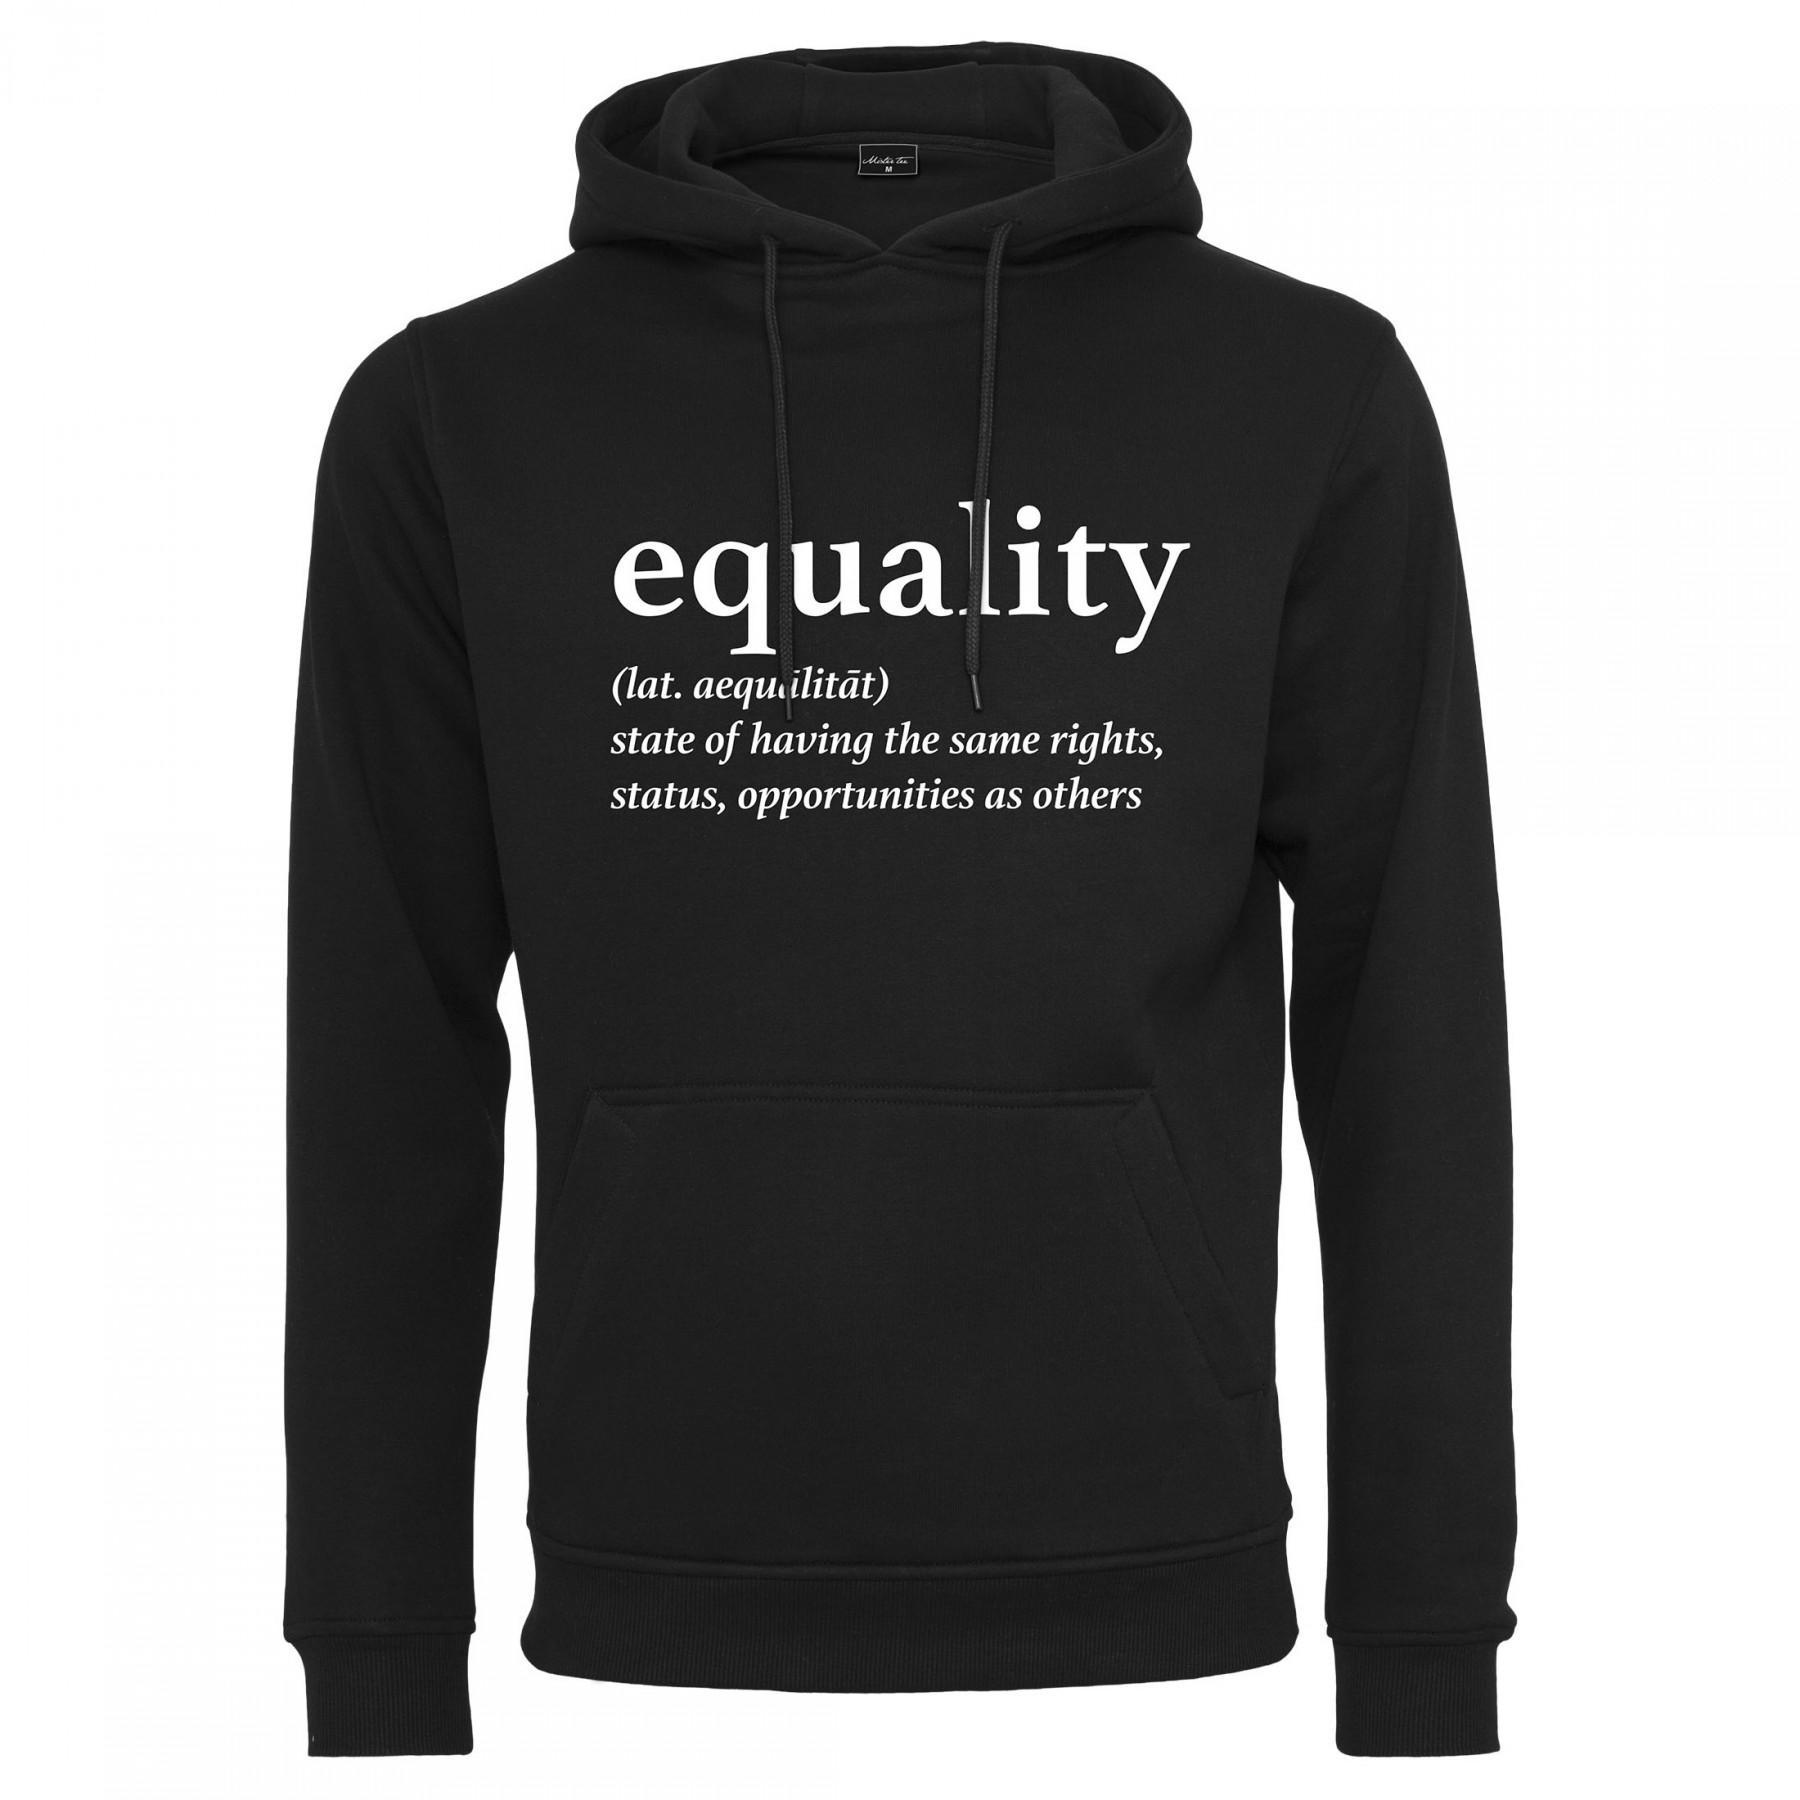 Sweatshirt woman Mister Tee equality definition